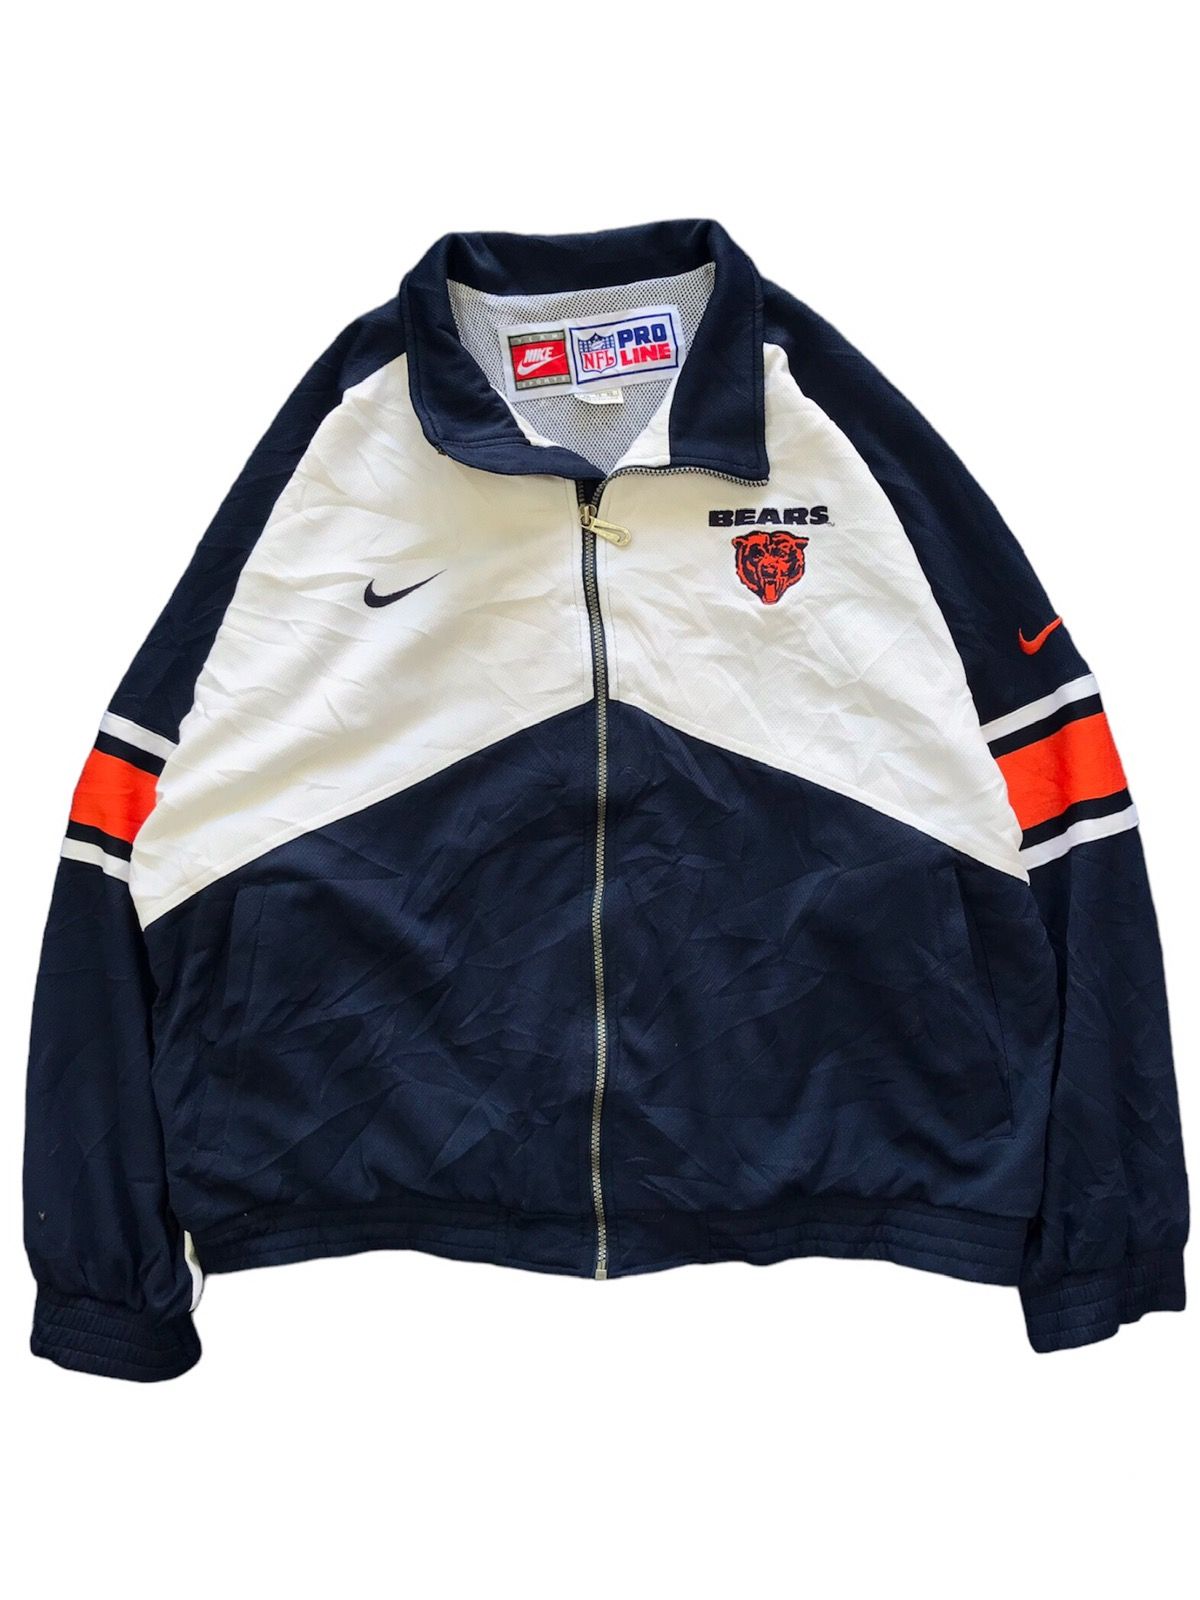 Nike Vintage Nike Chicago Bears NFL Pro Line jacket Size US XL / EU 56 / 4 - 1 Preview